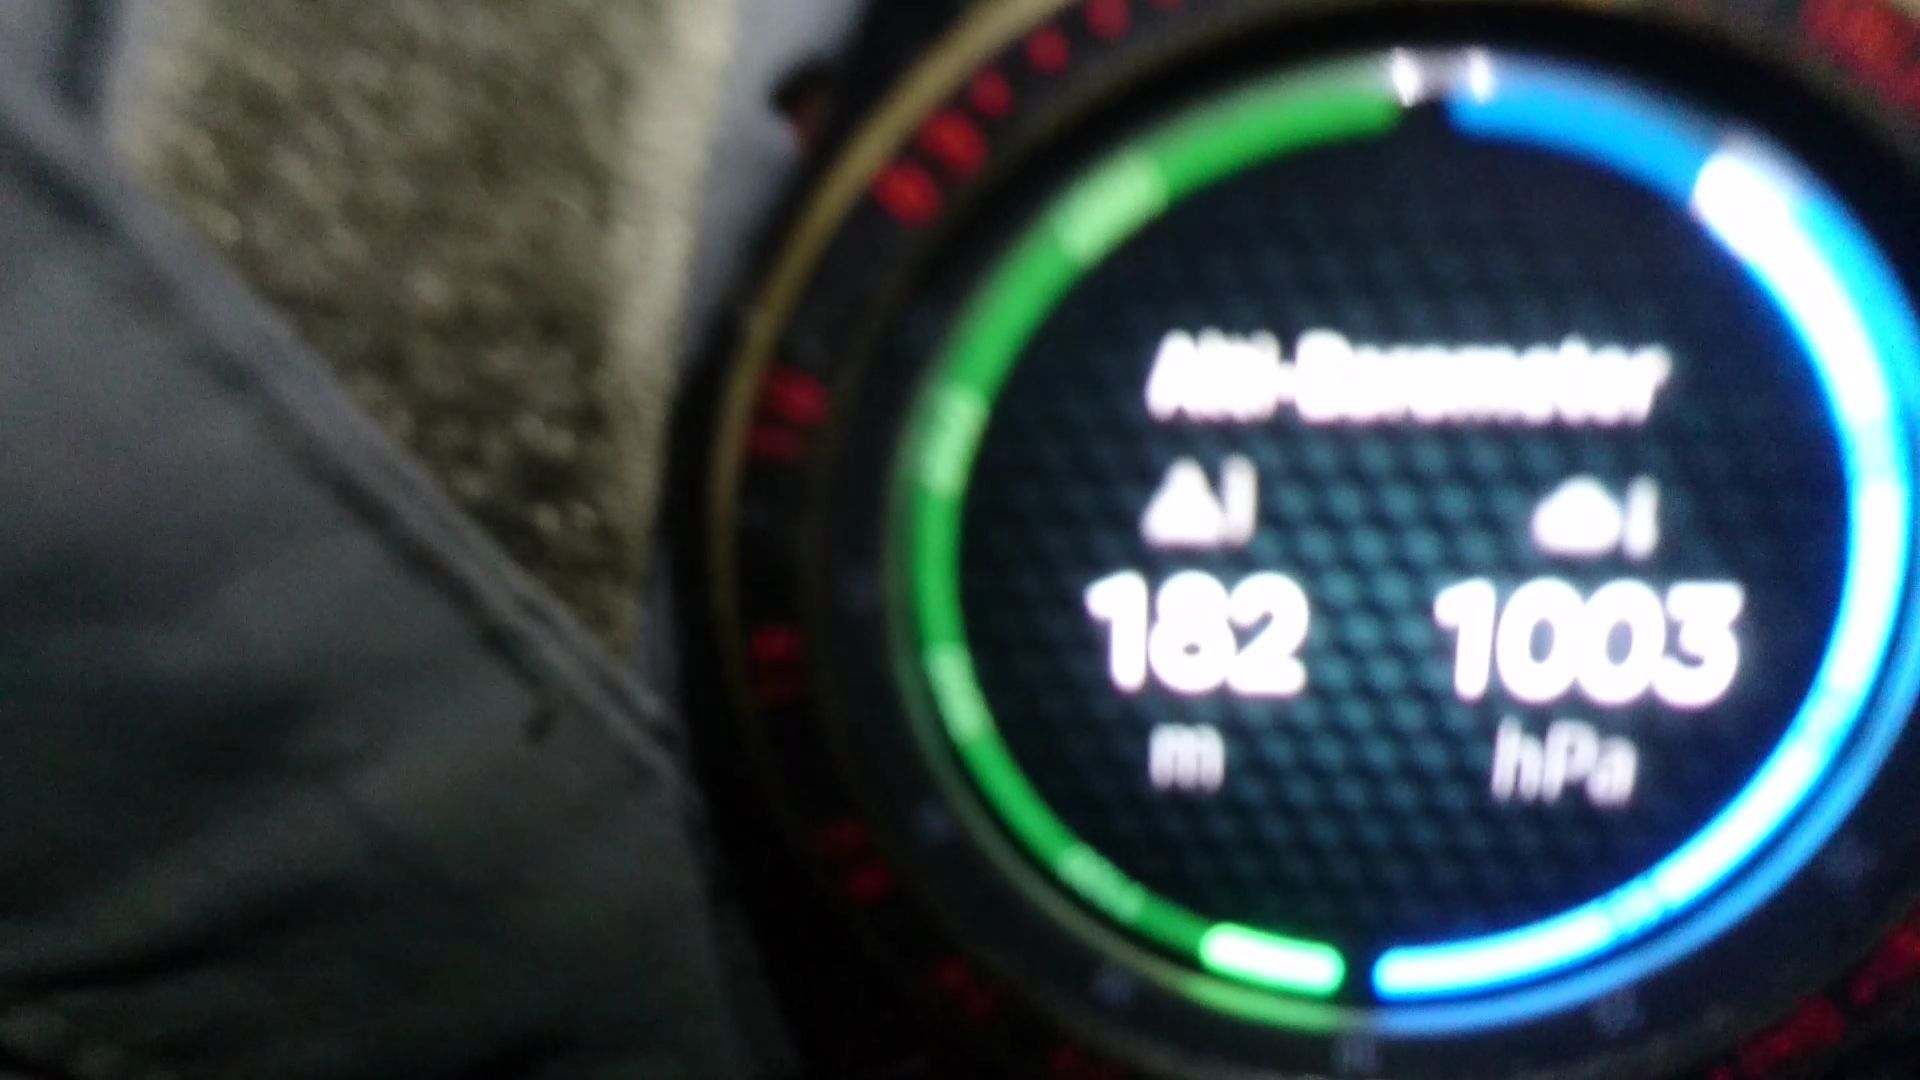 Alti-barometer on 46mm watch - Page 2 - Samsung Community